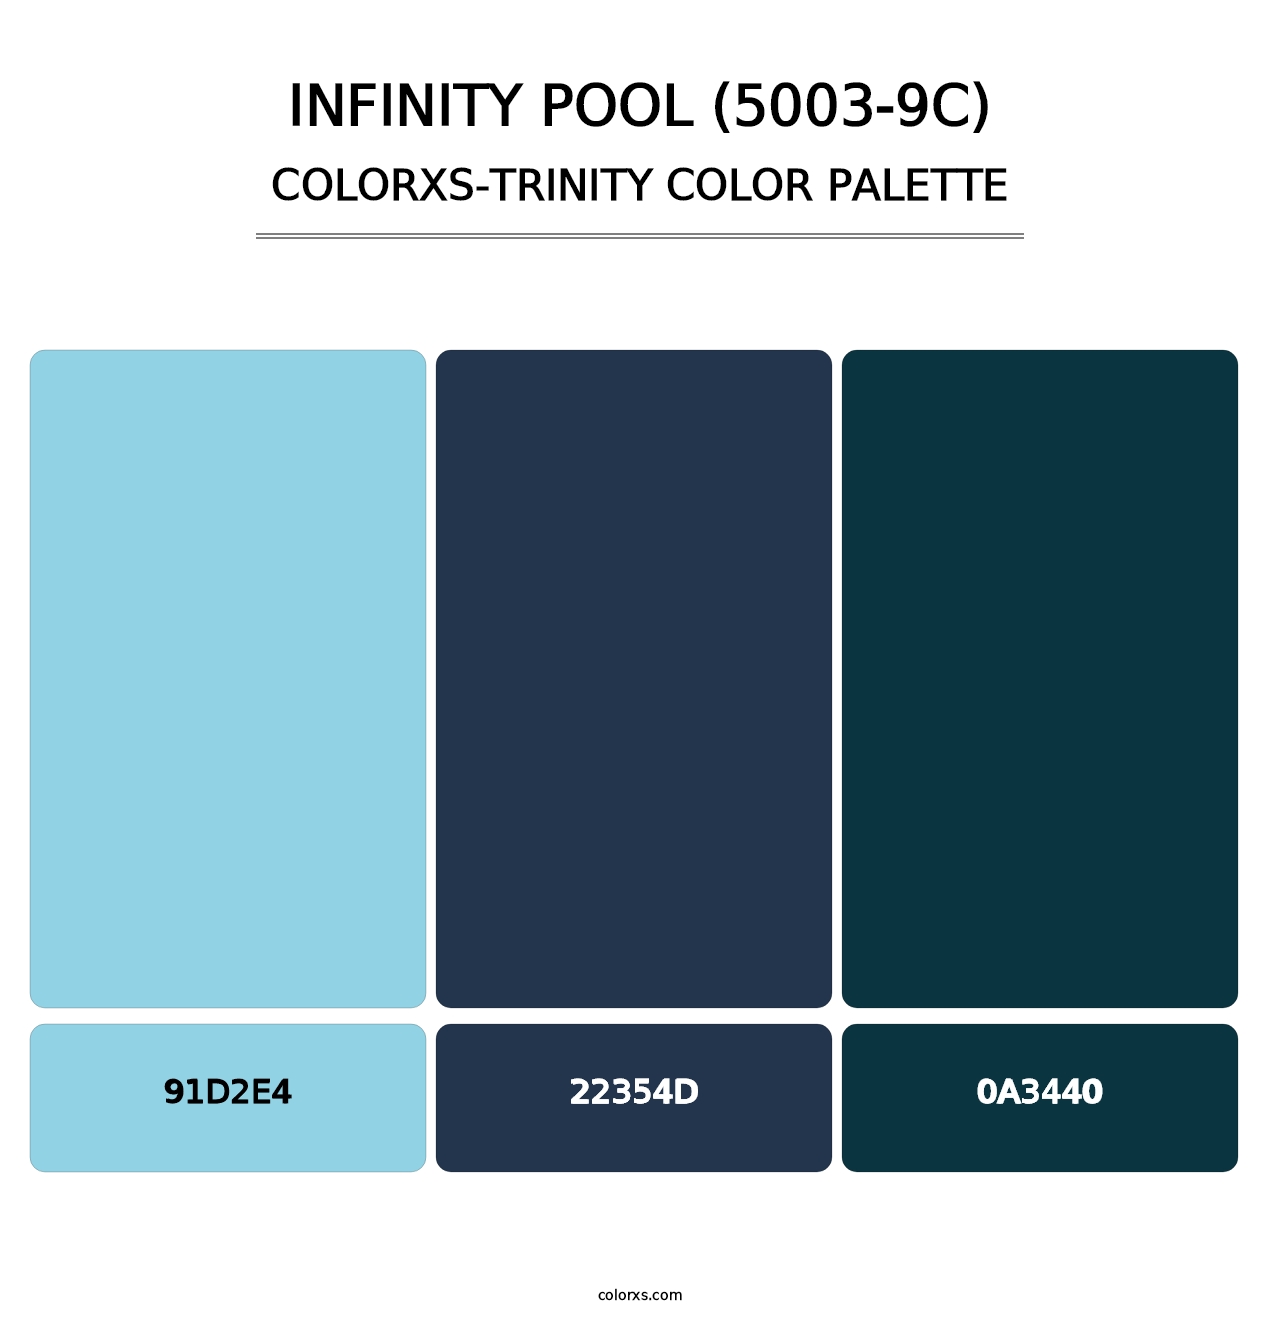 Infinity Pool (5003-9C) - Colorxs Trinity Palette